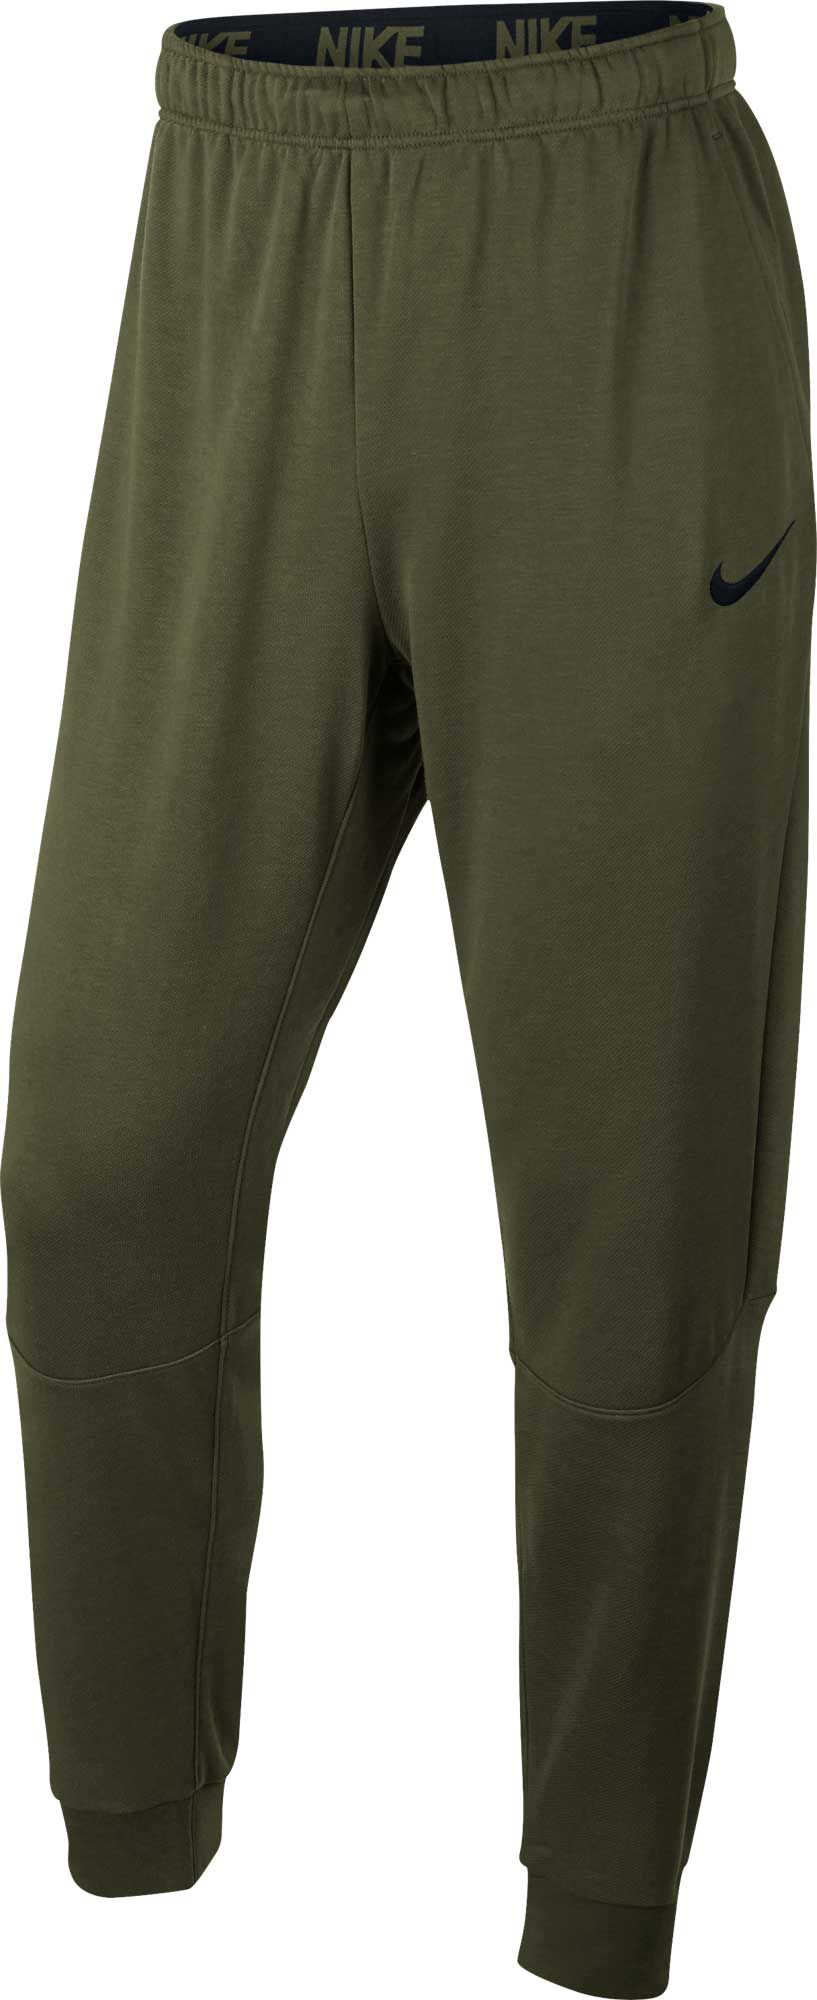 Nike Men's Dry Tapered Fleece Pants - .97